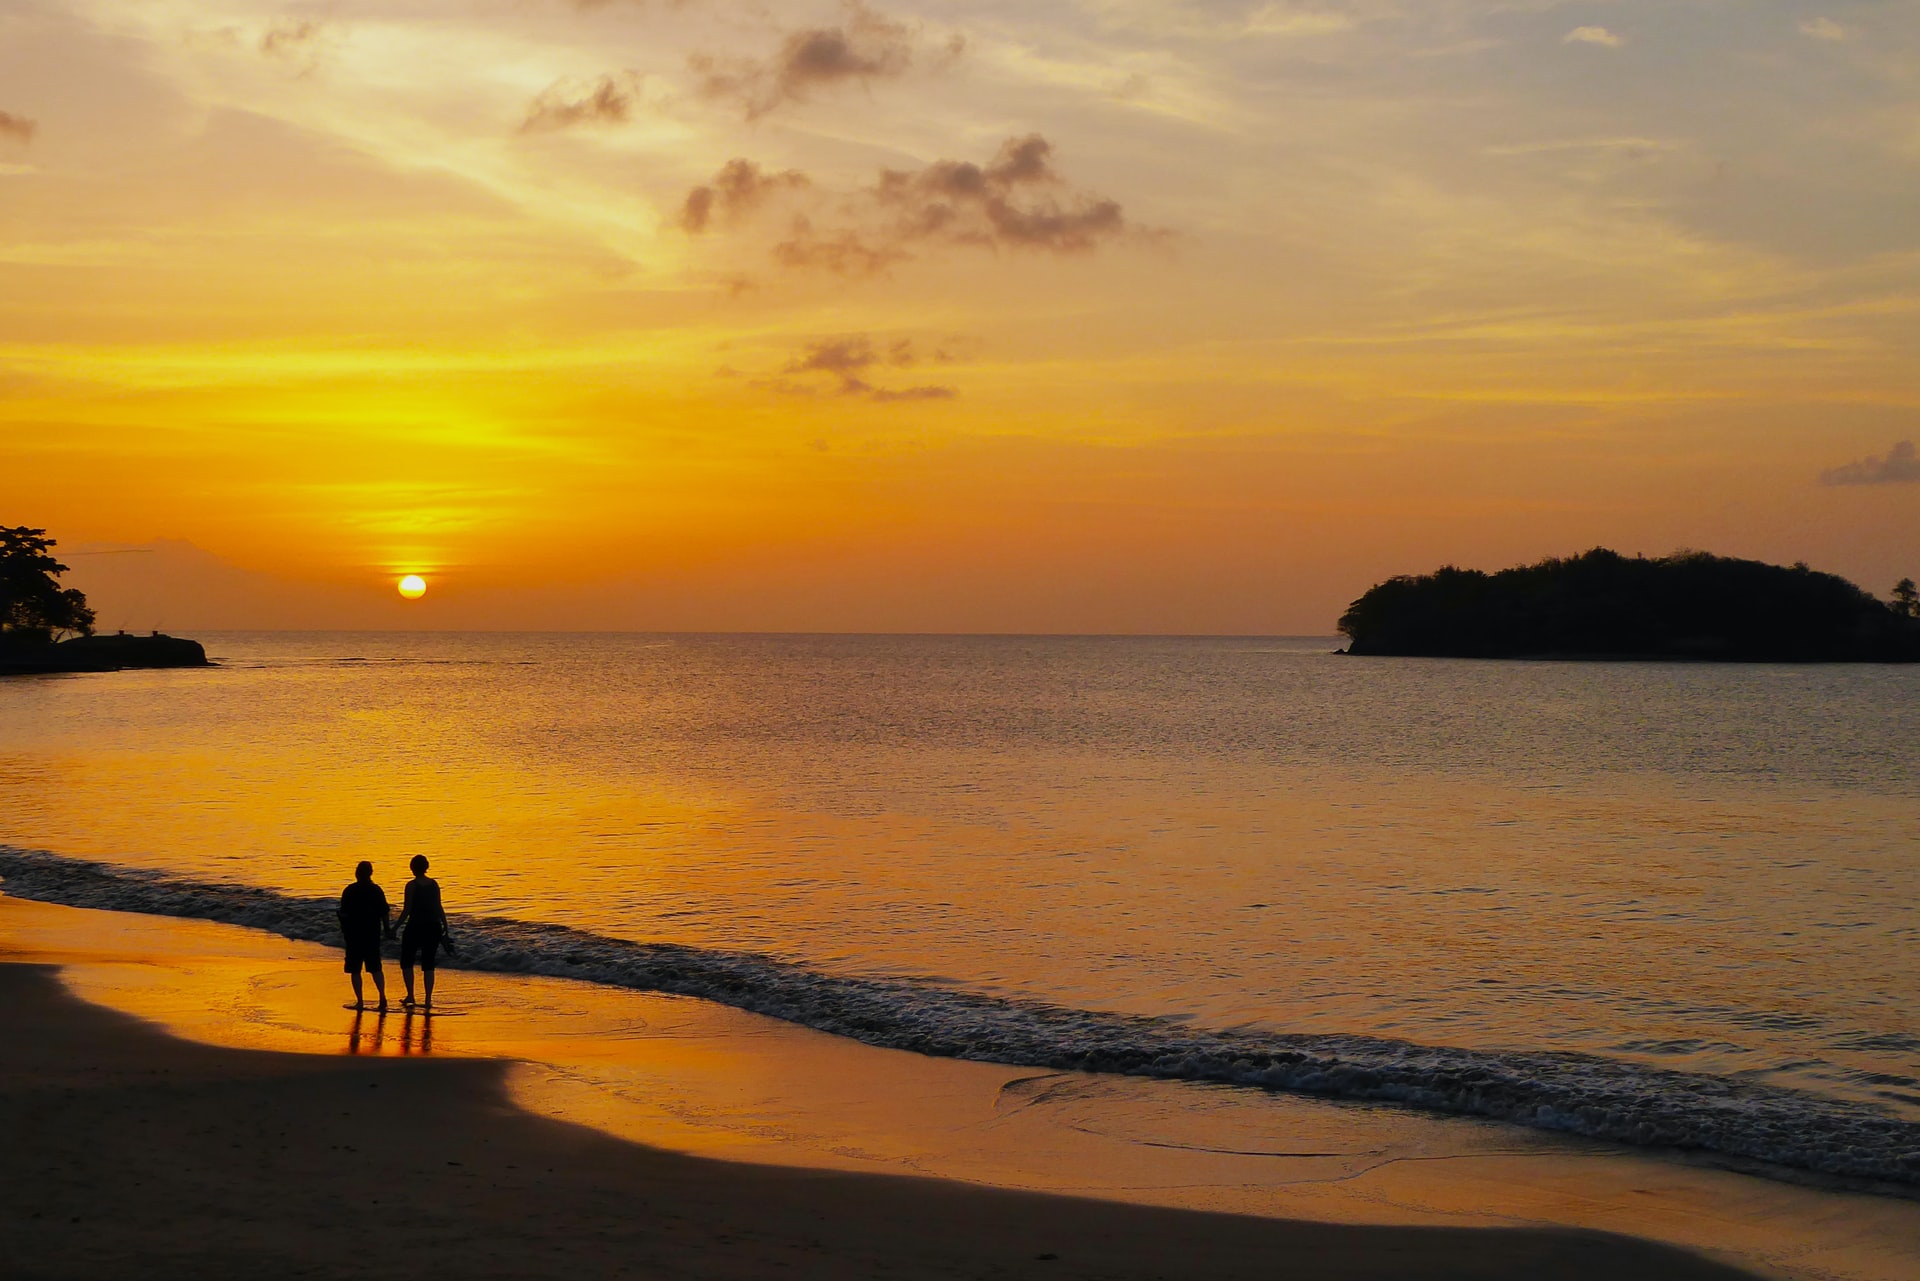 St. Lucia beach at sunset, a couple walks on the sand